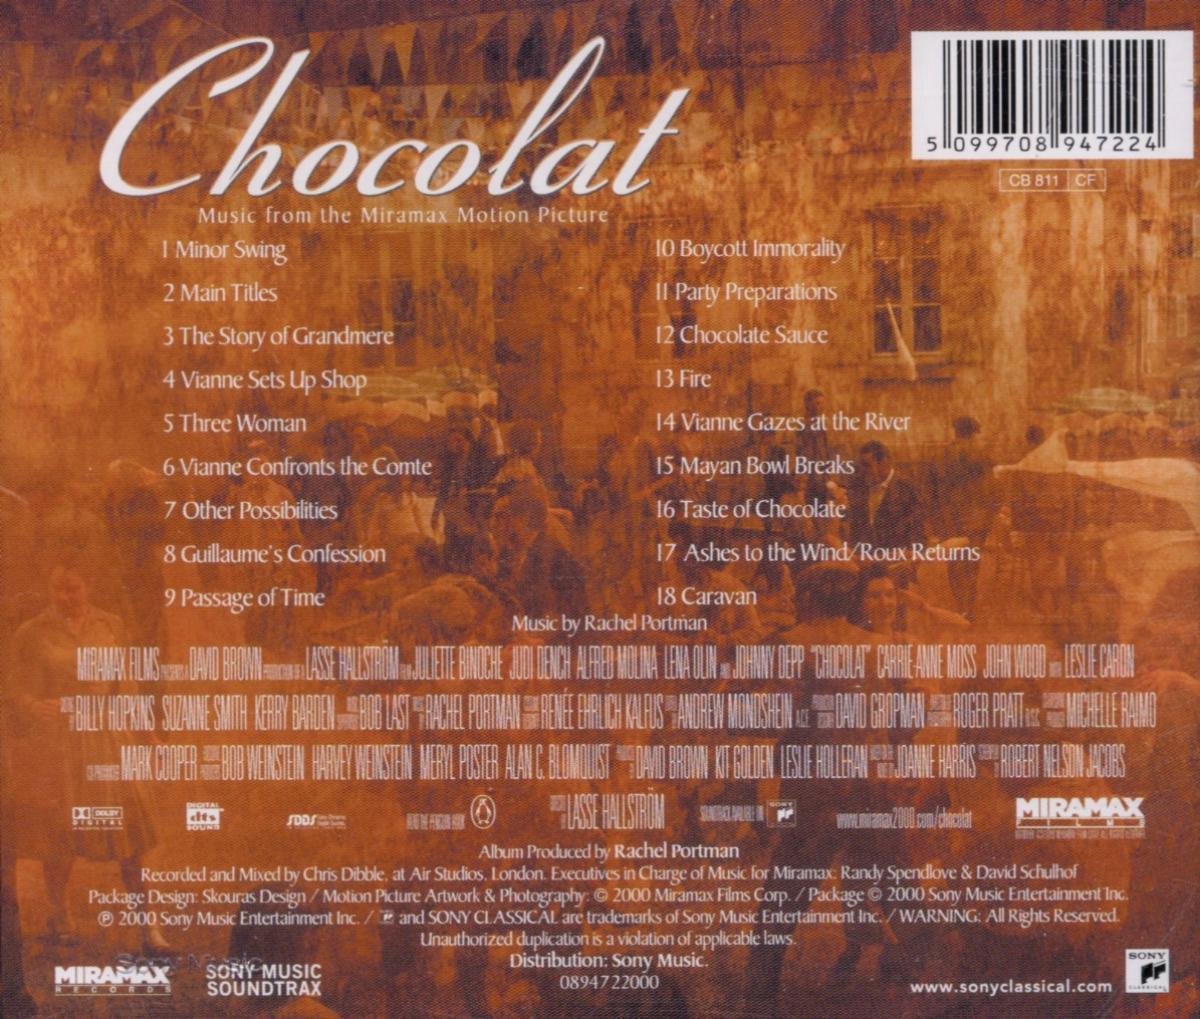 Chocolat | Rachel Portman